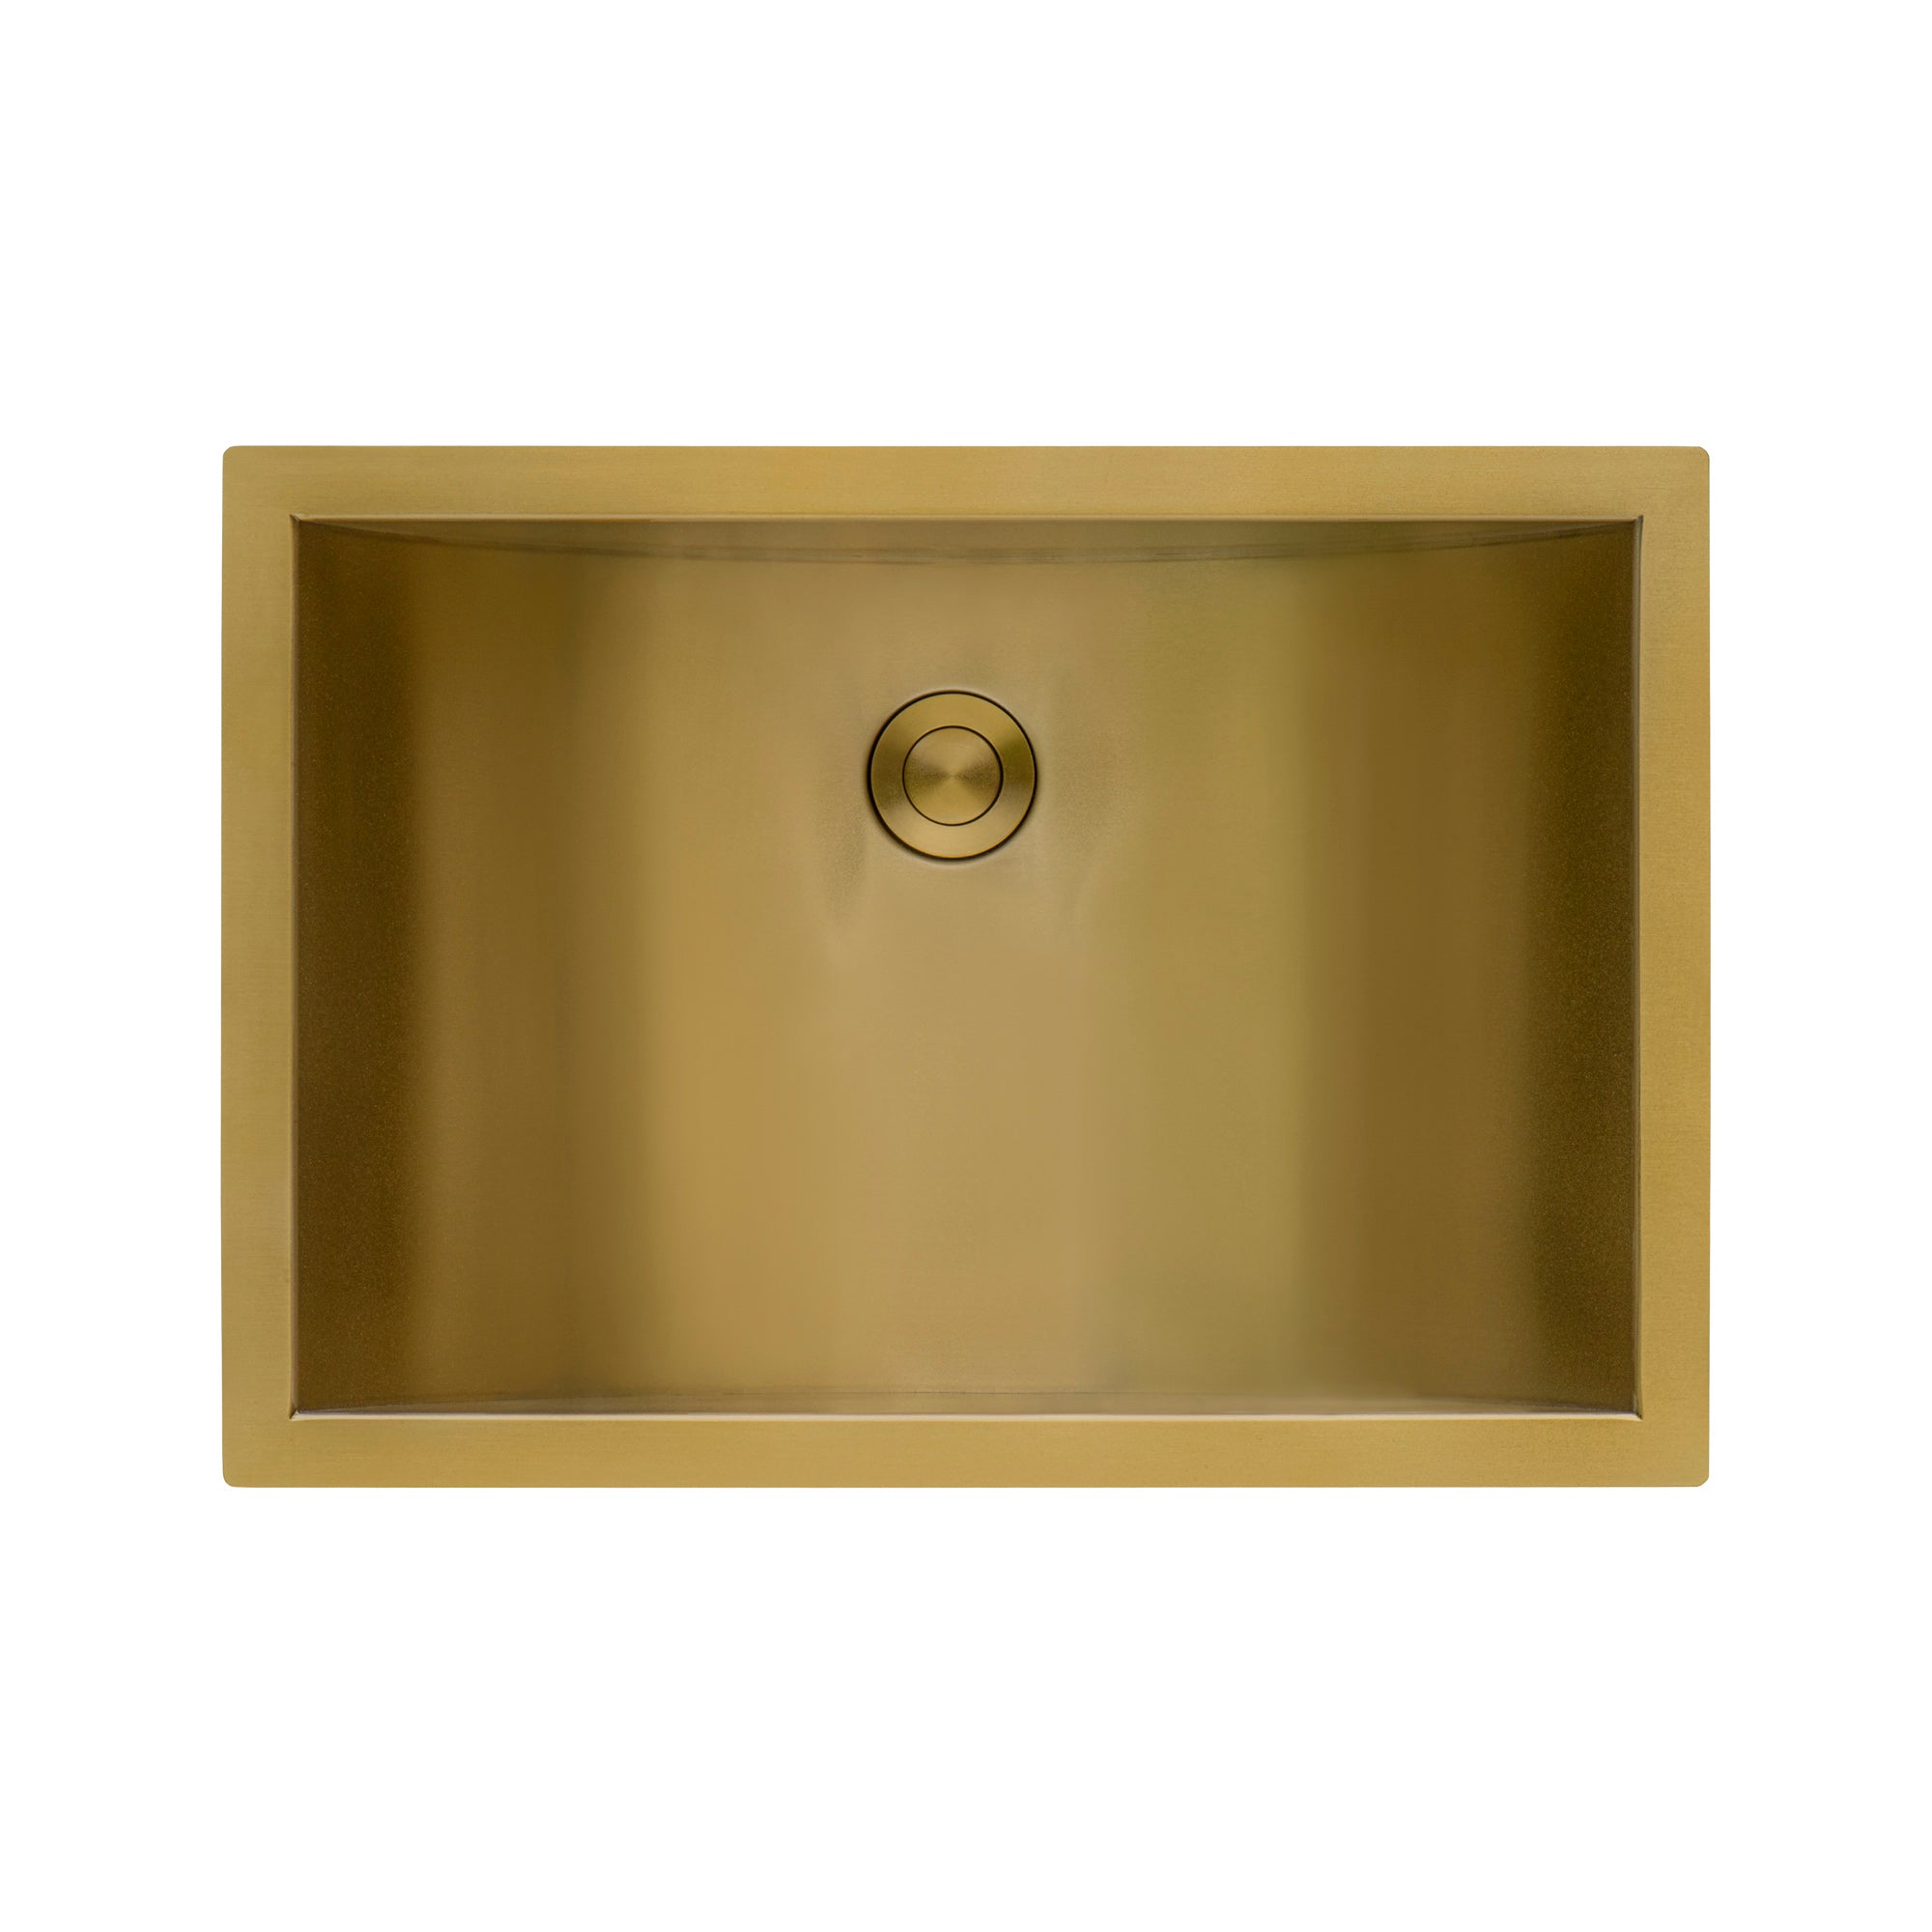 Ruvati 18 x 12 inch Brushed Gold Polished Brass Rectangular Bathroom Sink Undermount – RVH6110GG